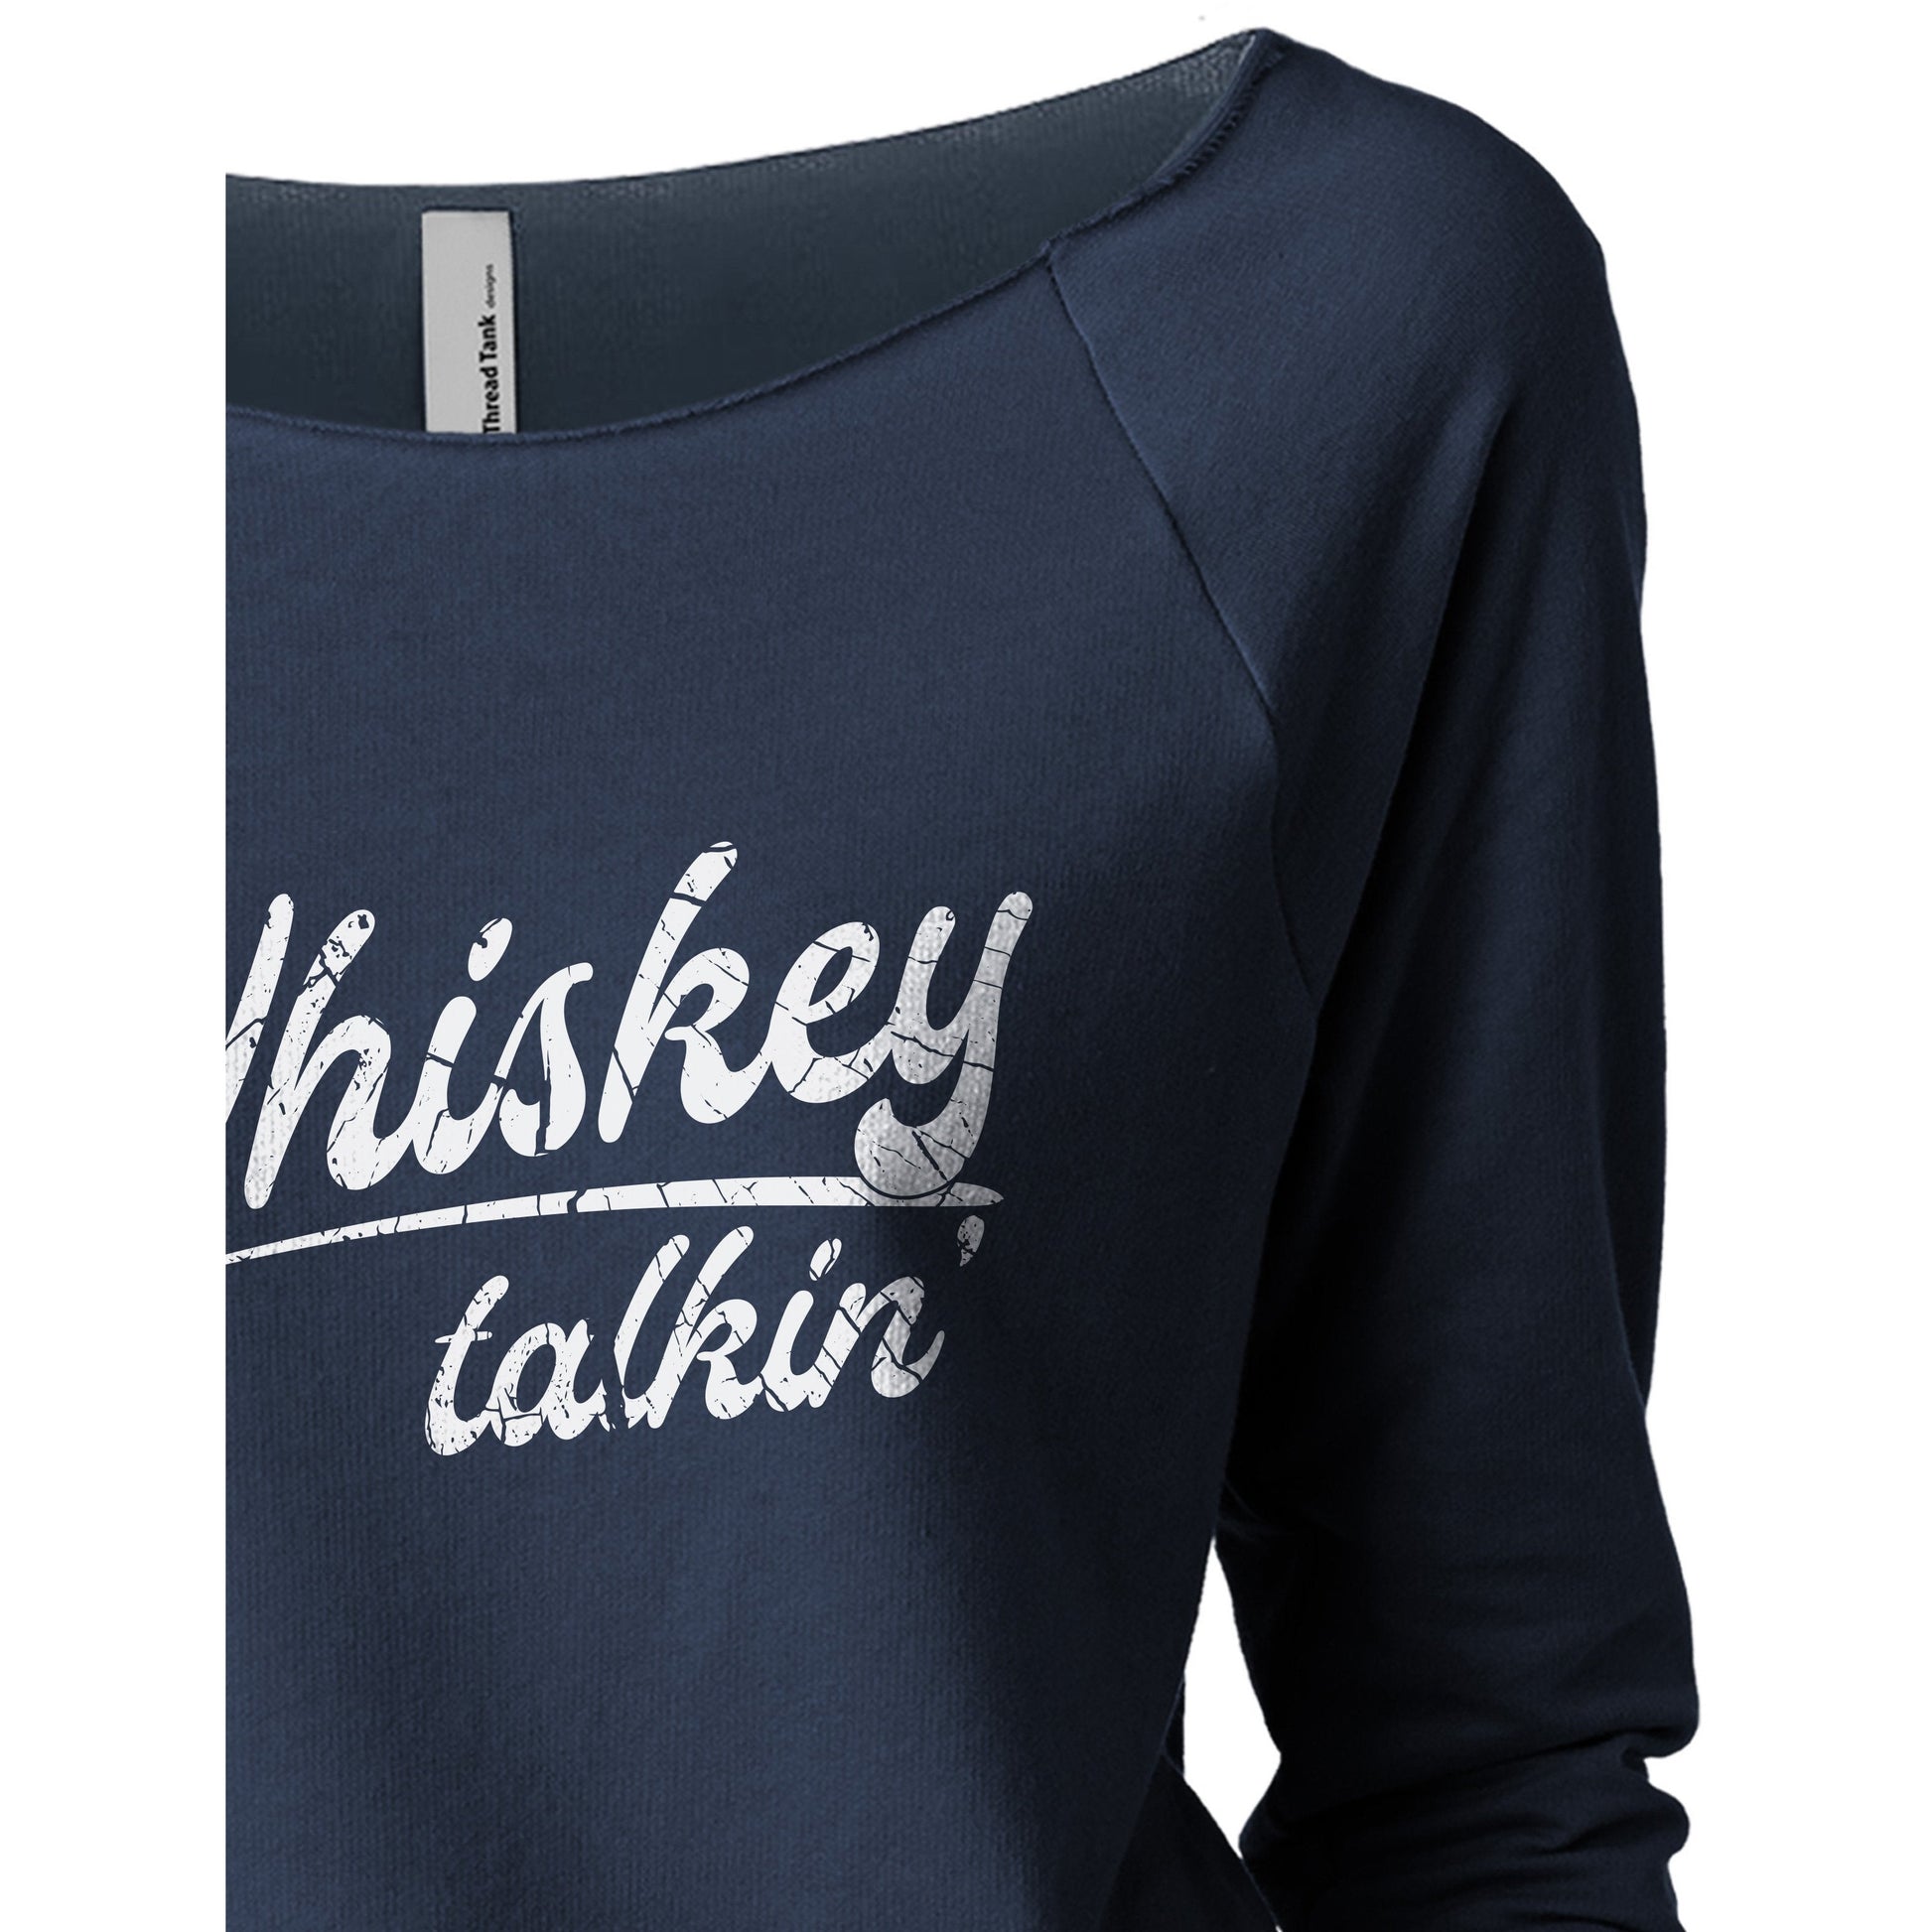 Whiskey Talkin' - thread tank | Stories you can wear.